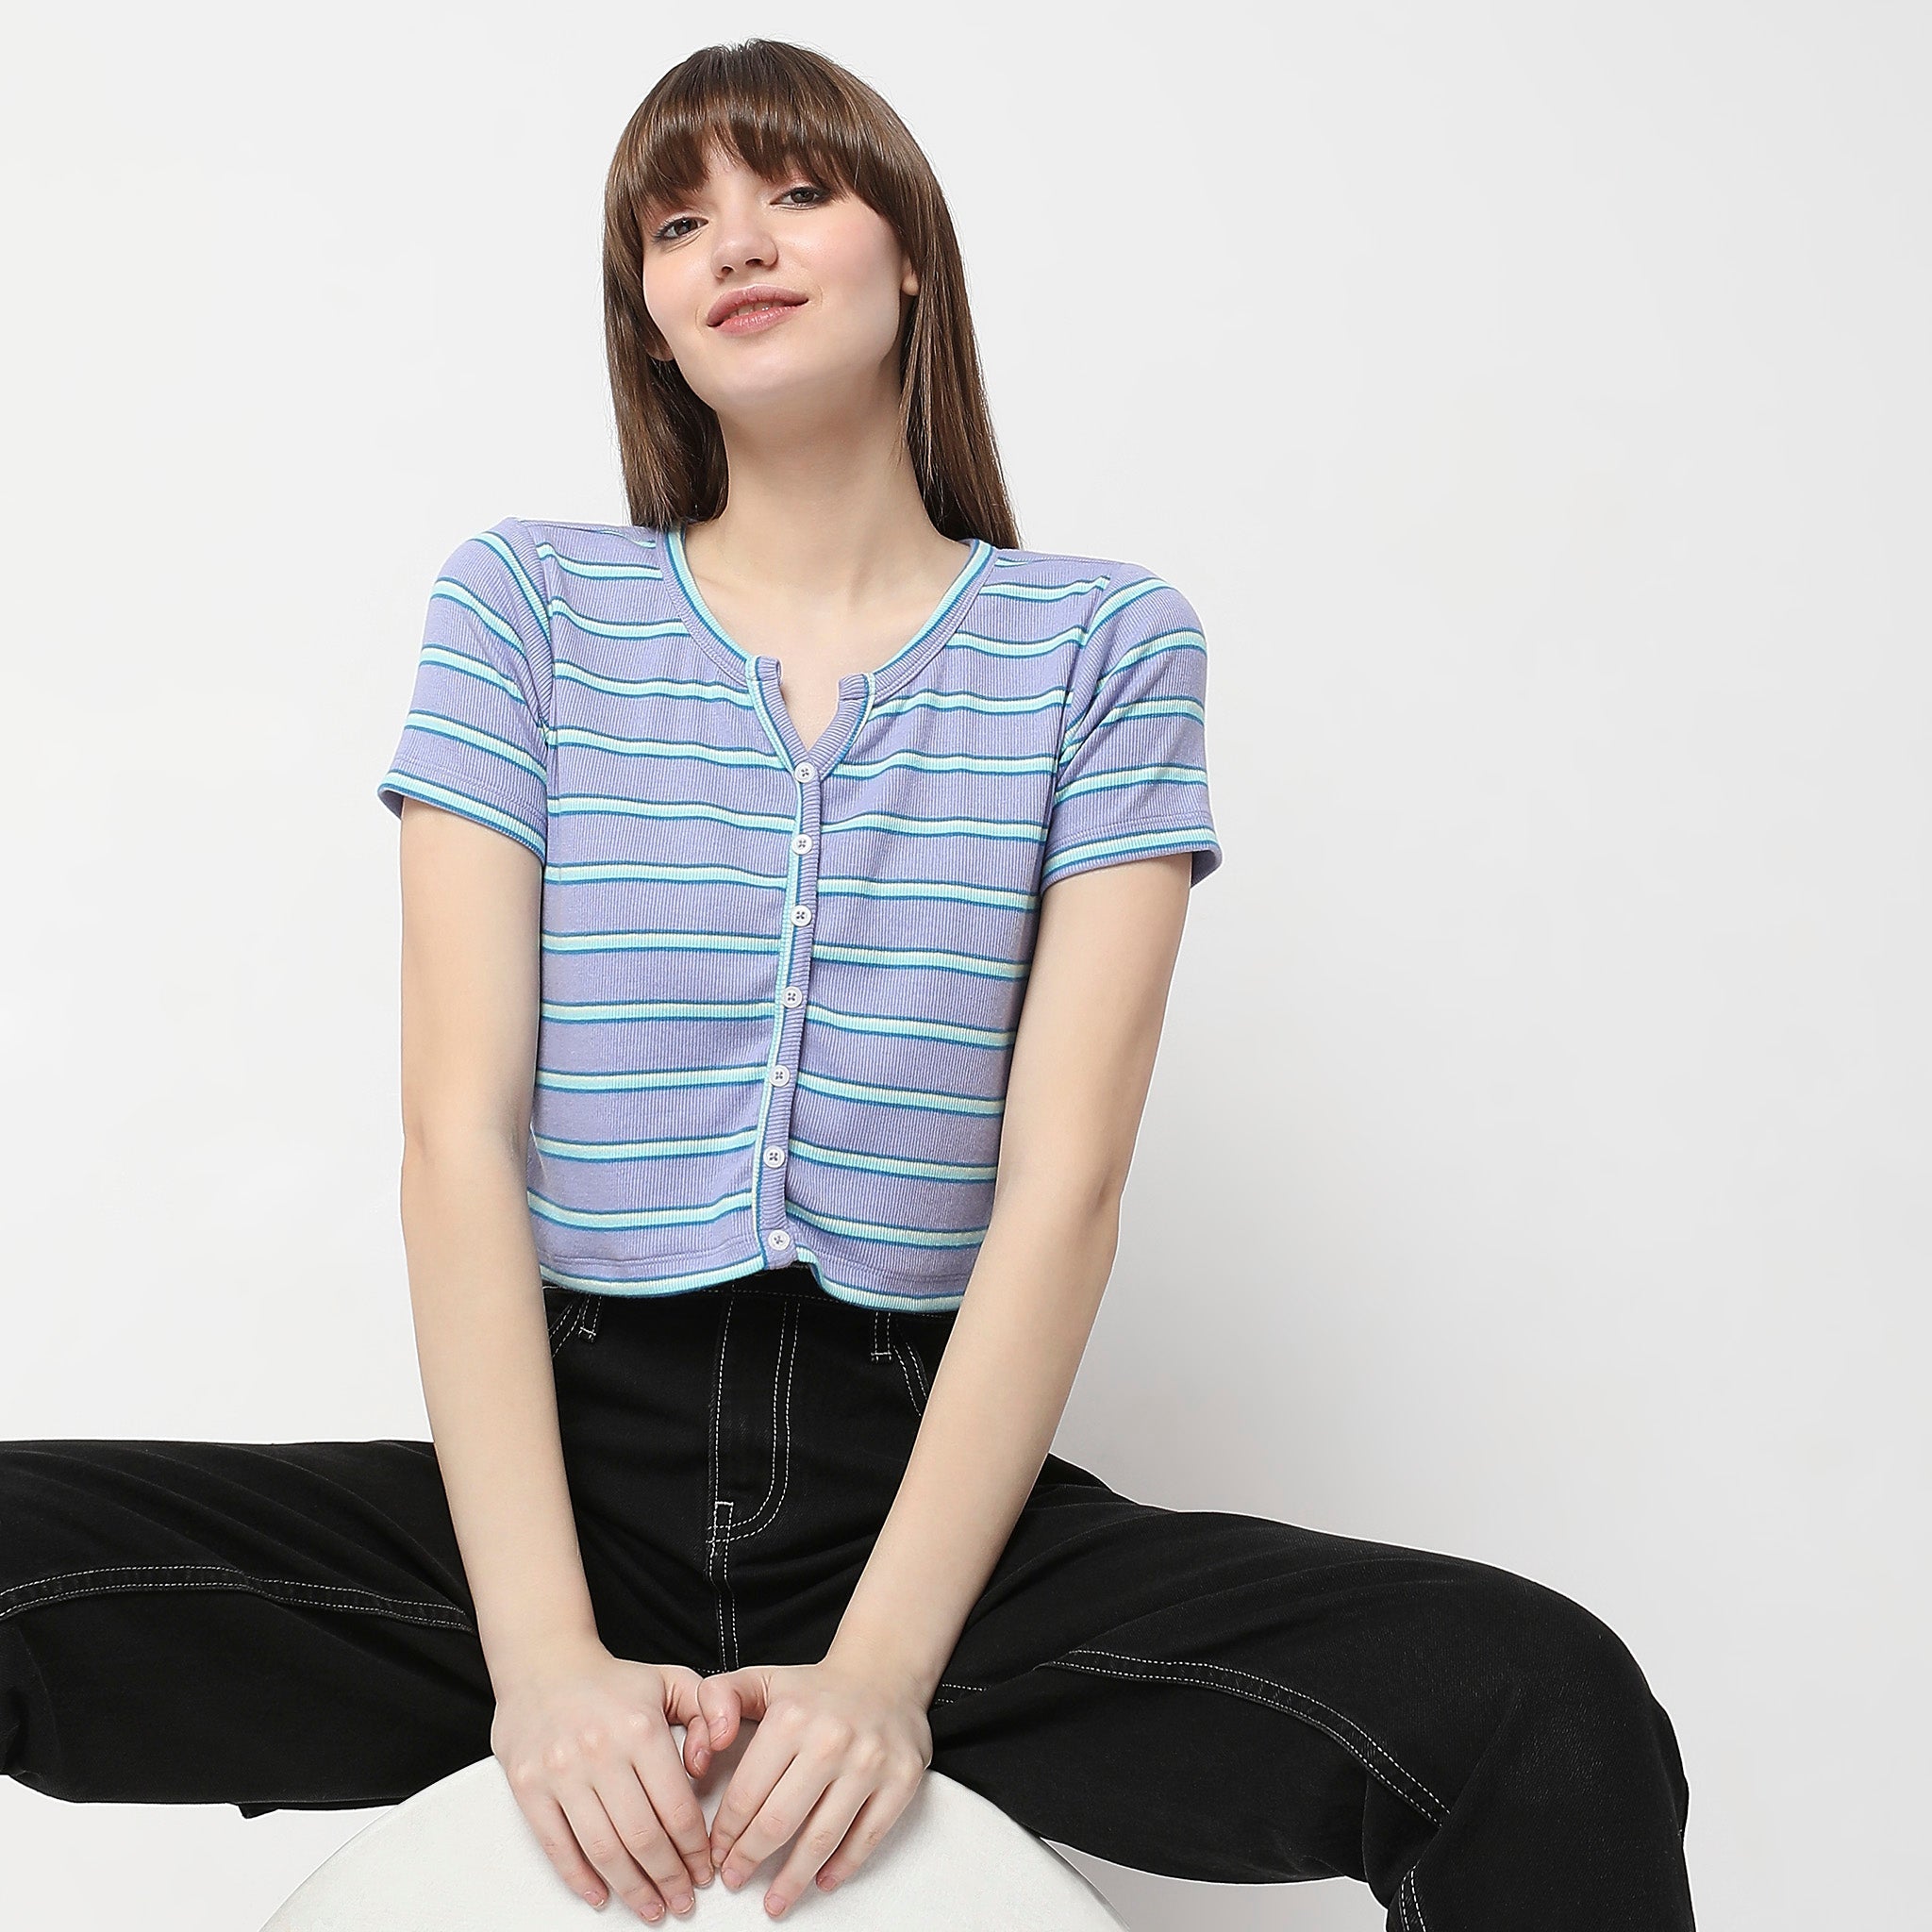 Women Wearing Slim Fit Striped T-Shirt